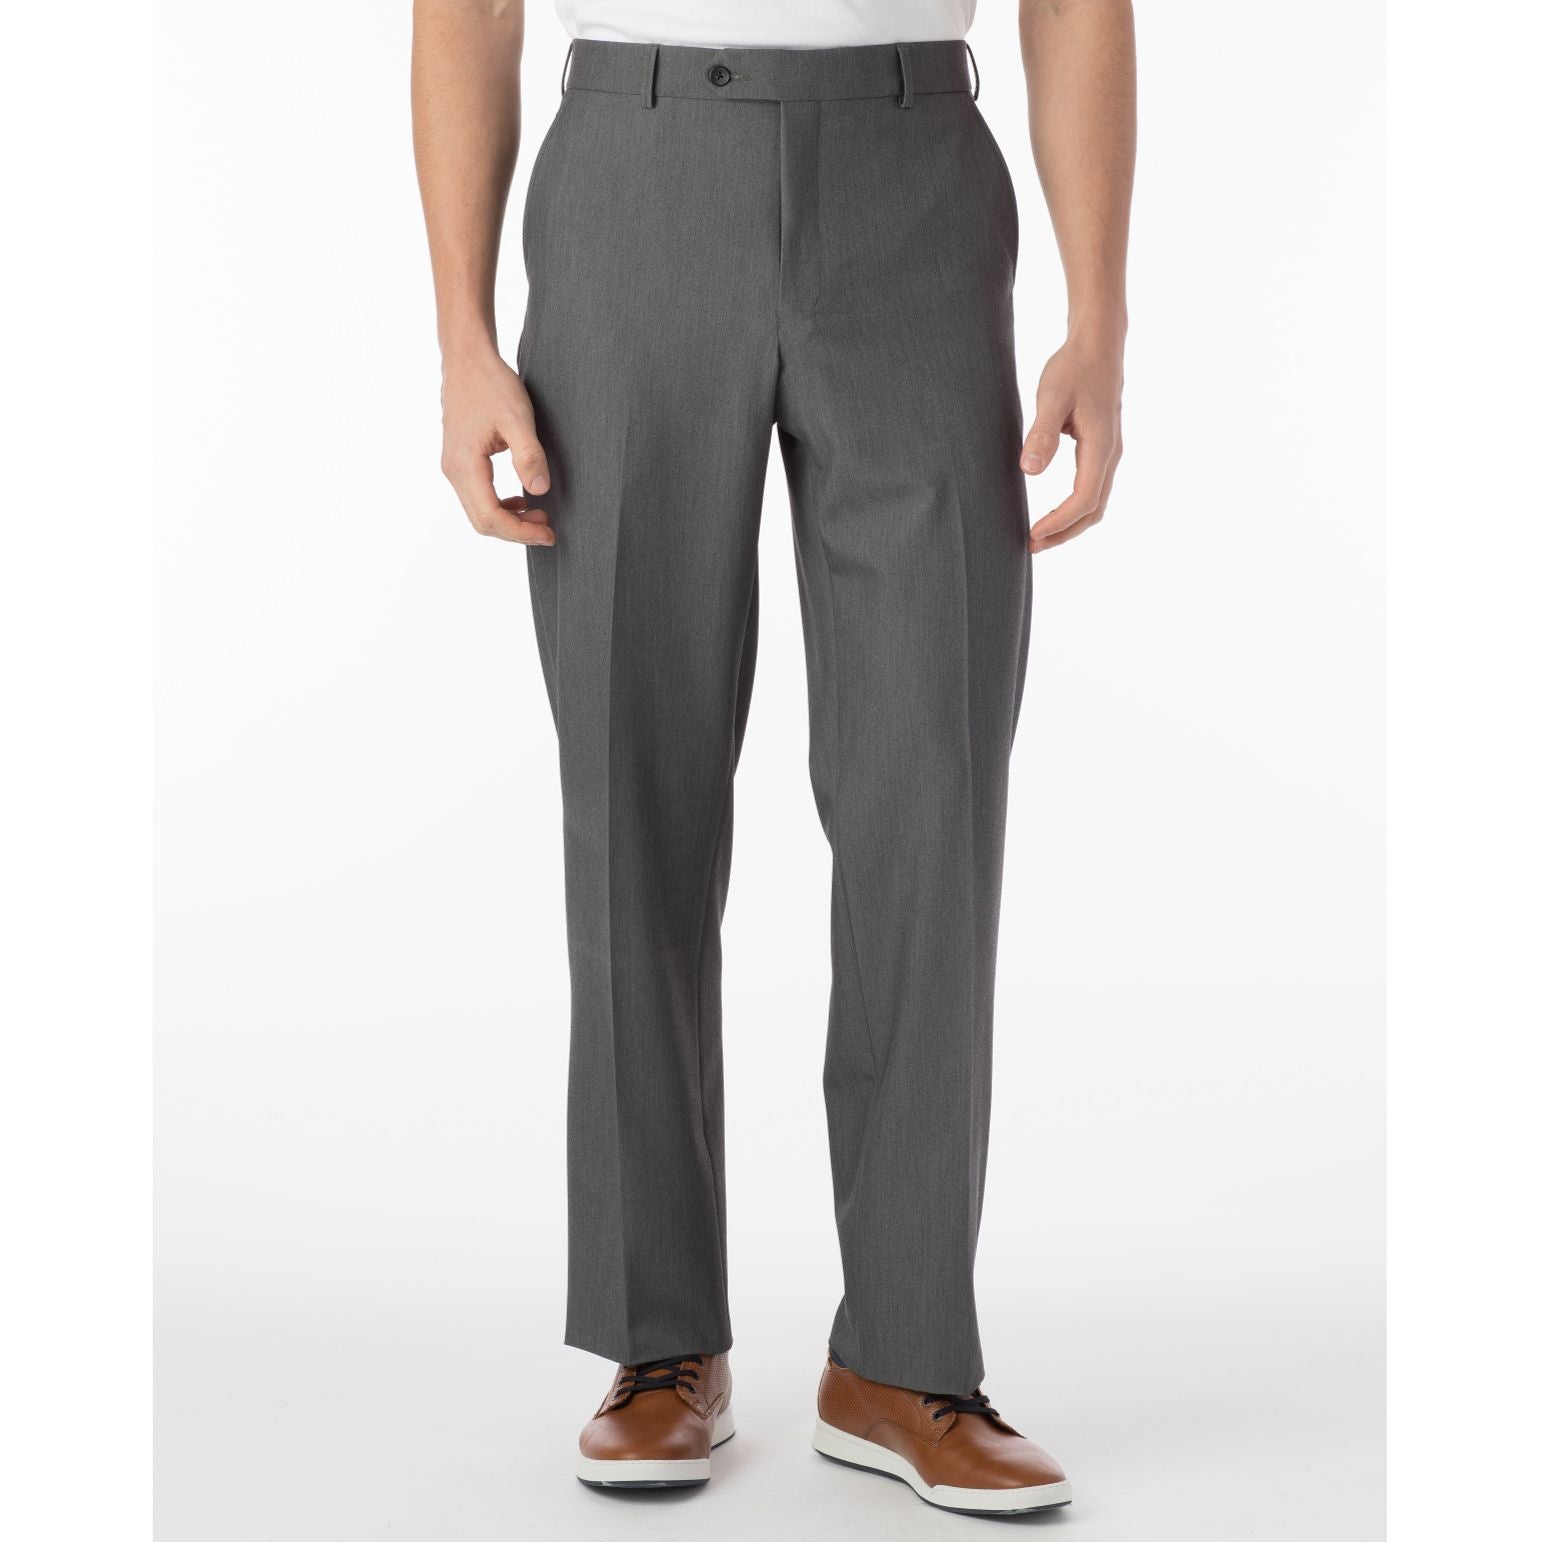 Comfort-EZE Commuter Bi-Stretch Gabardine Trouser in Medium Grey, Size 36 (Soho Modern Fit) by Ballin